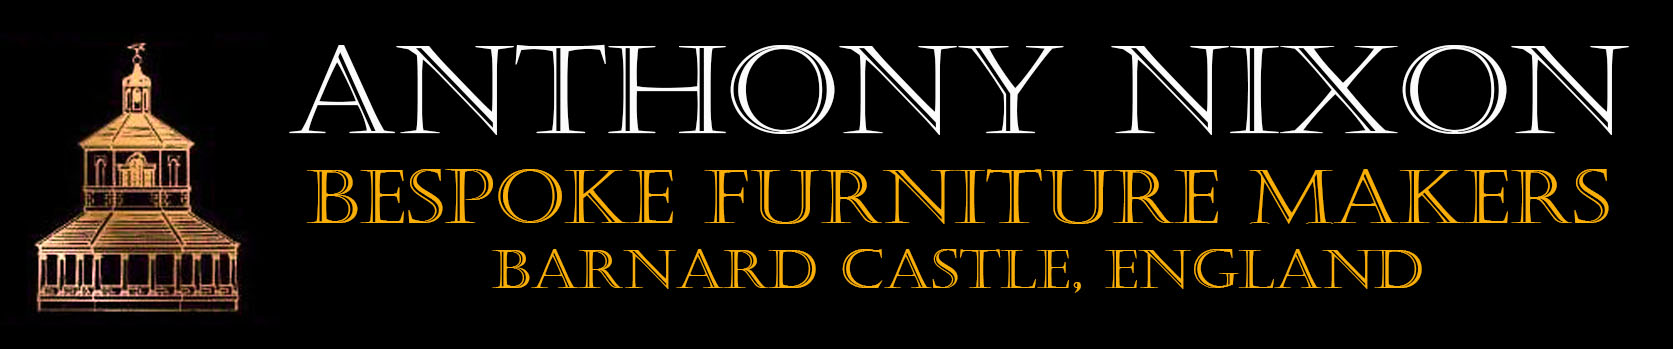 Anthony Nixon Furniture